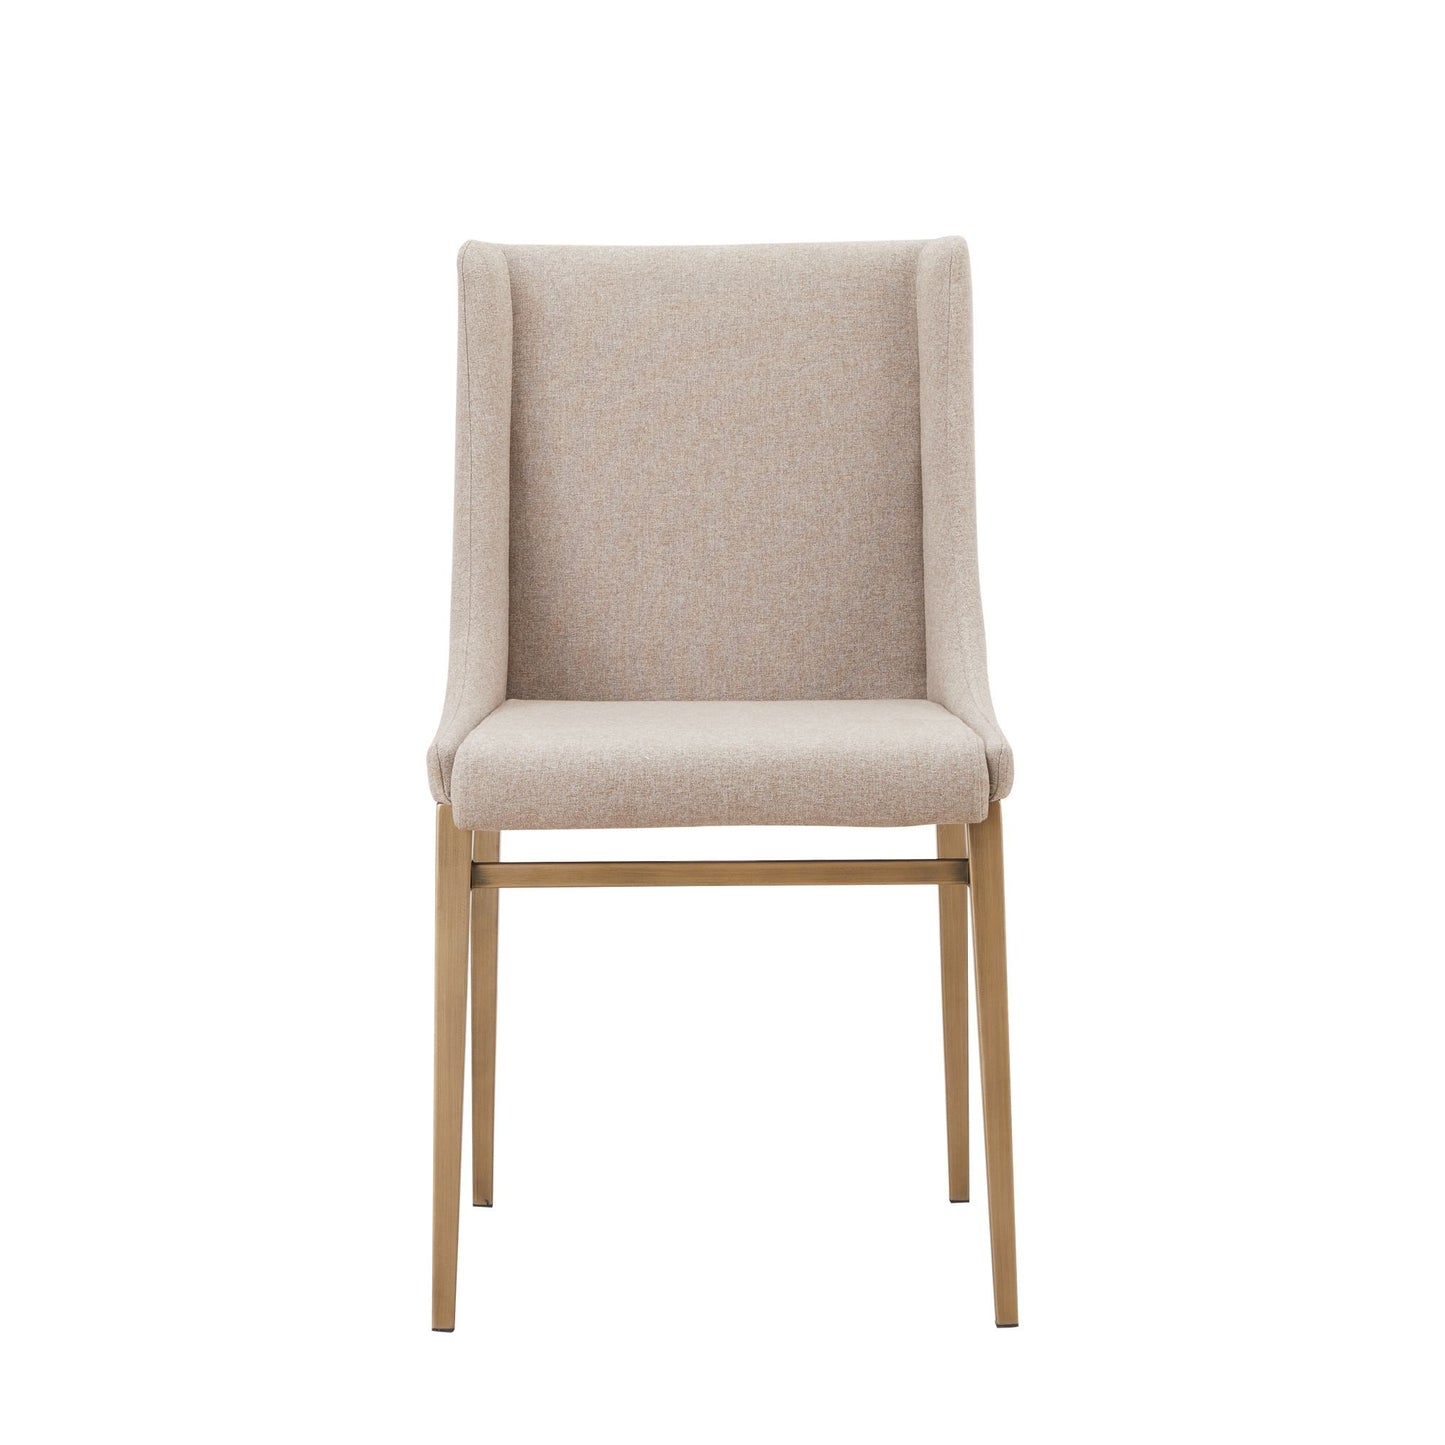 Modrest Mimi - Contemporary Beige + Brass Dining Chair (Set of 2)